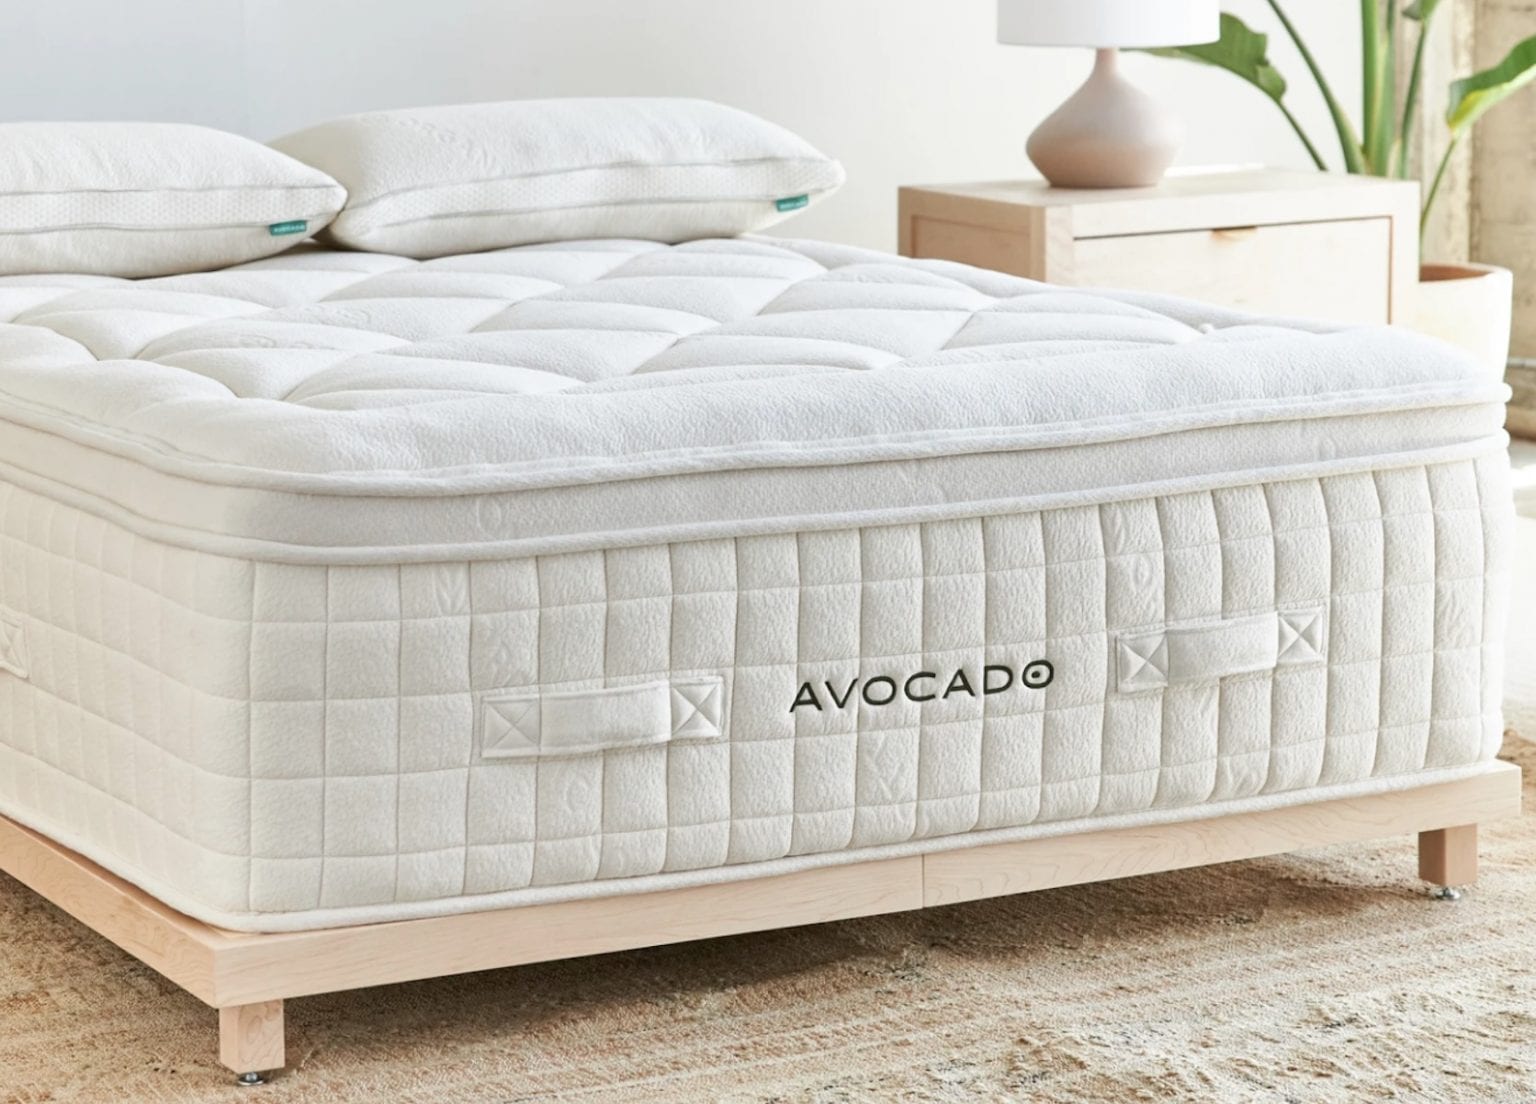 are avocado mattresses firm